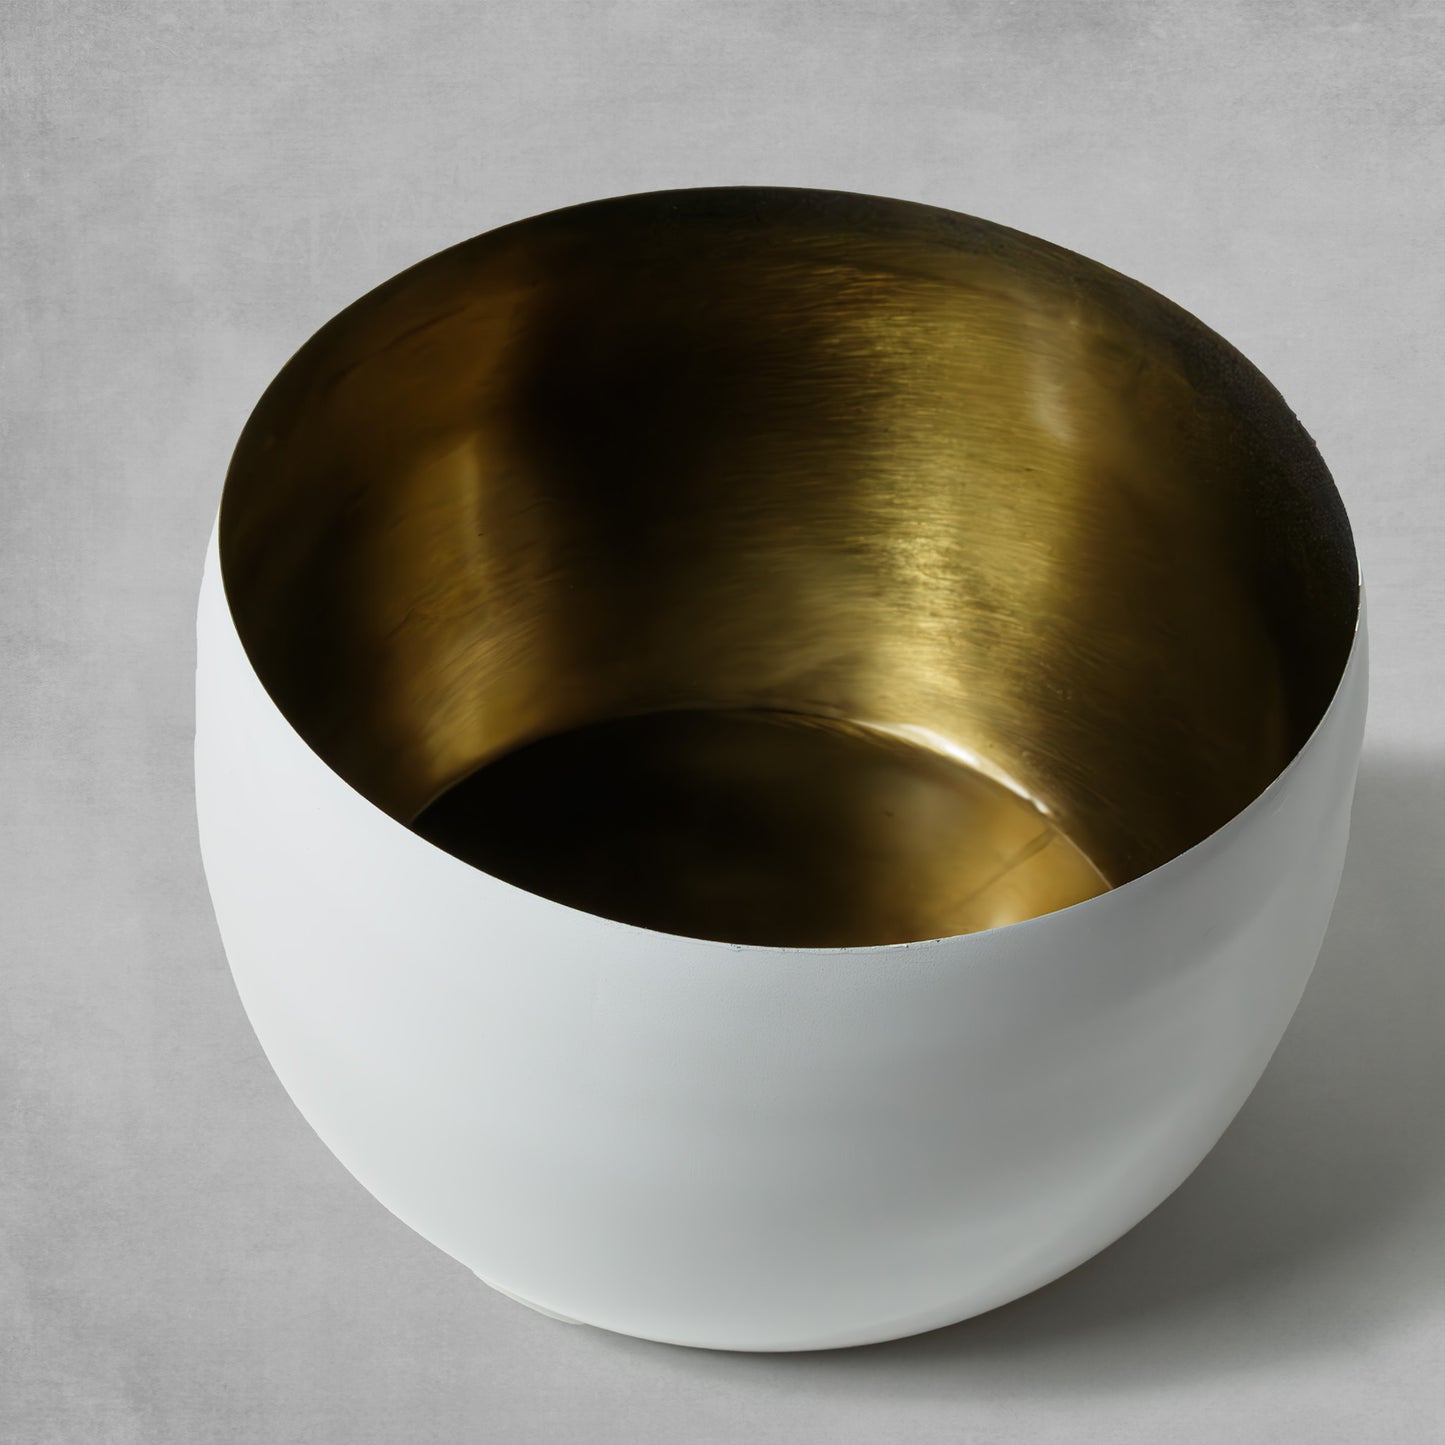 Decorative medium white bowl with antique brass finish on gray background.